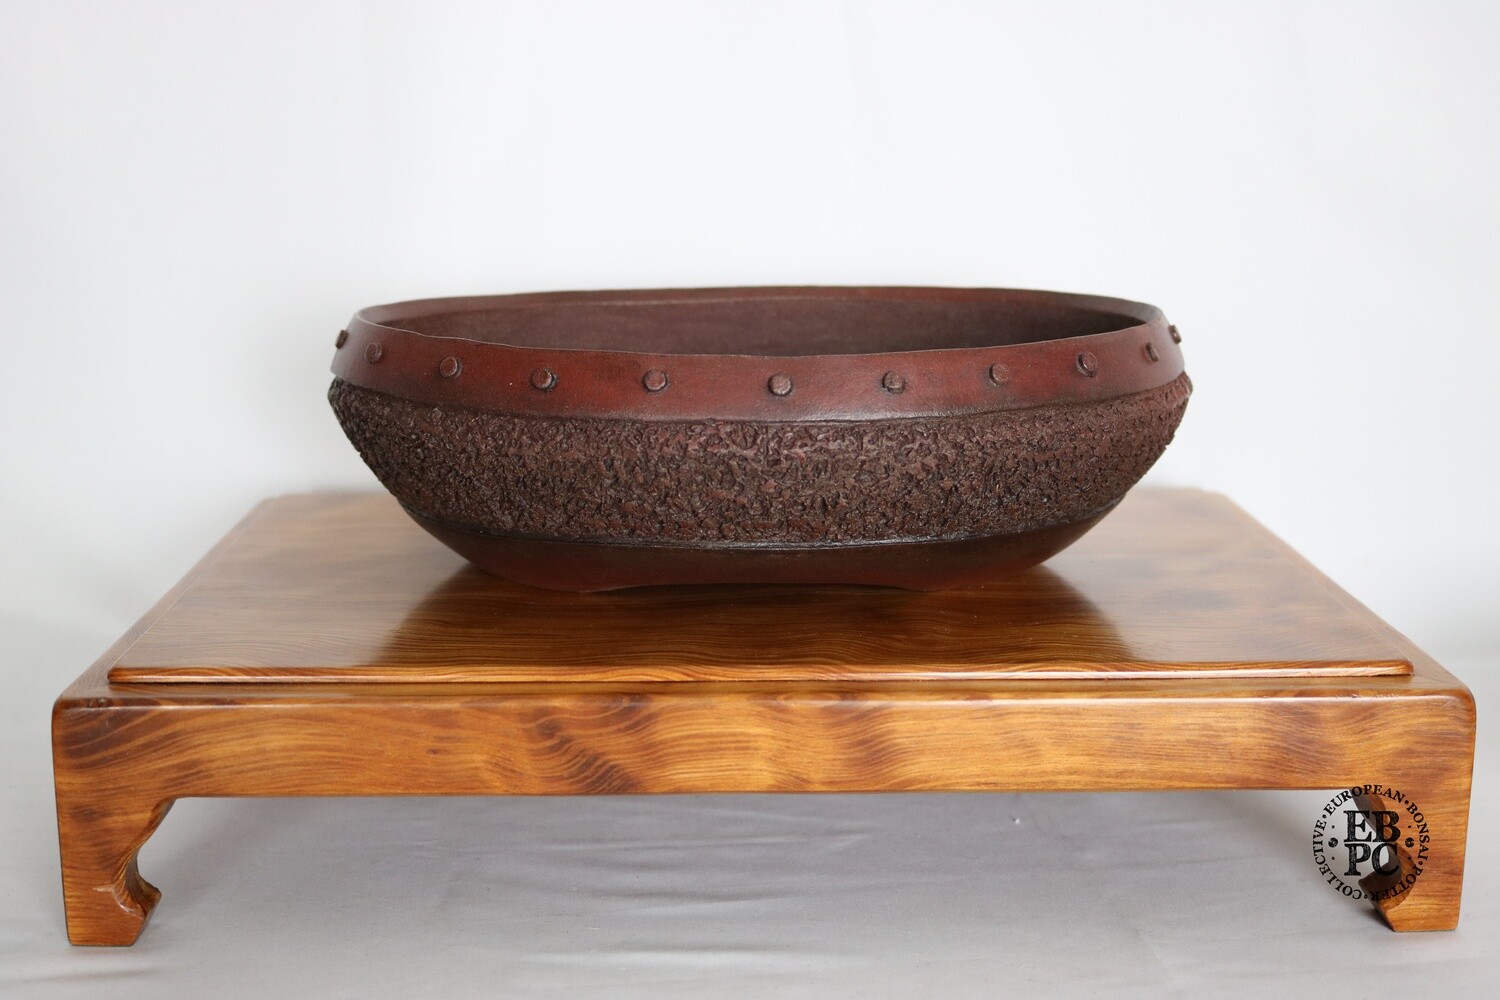 M. J. G. Ceramica - Unglazed; Oval; 26.7cm Textured Body, Rivets; Reddish-brown Clay; Maria Jose Gonzalez